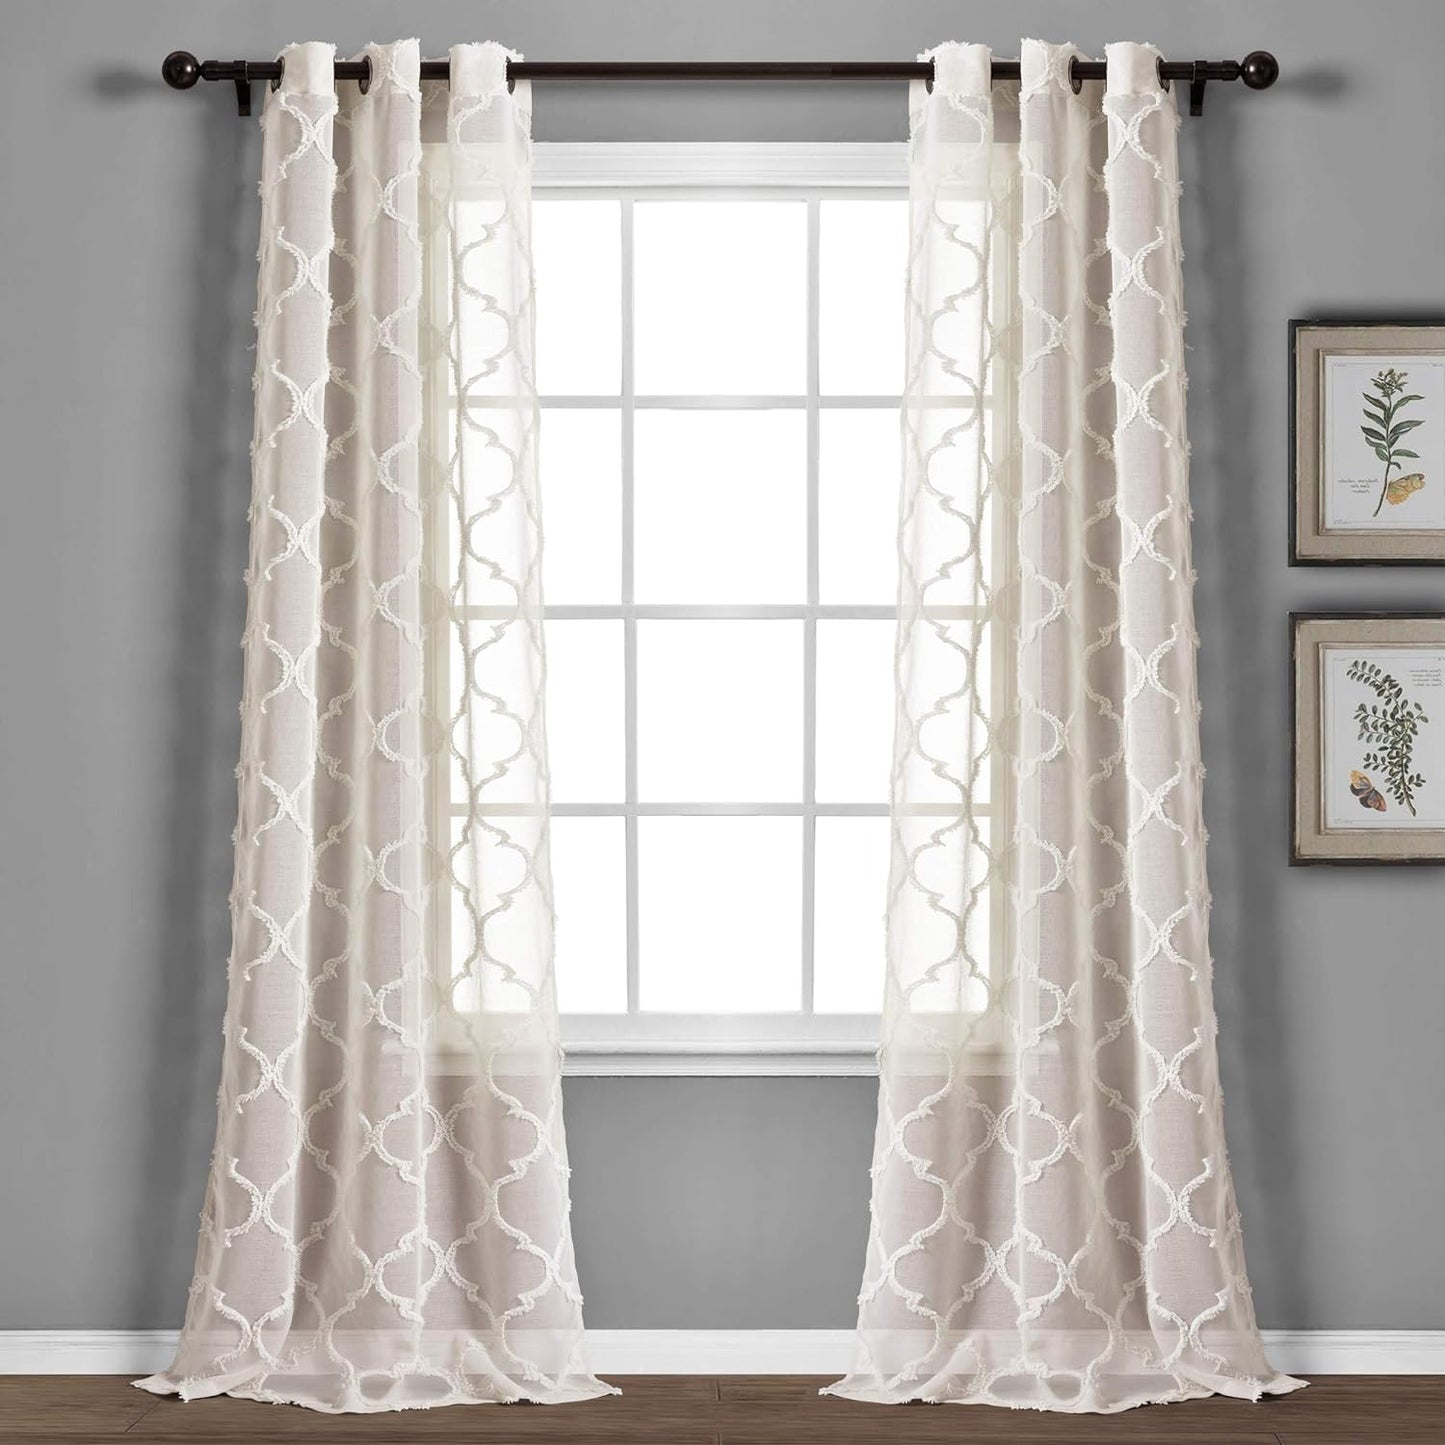 Lush Decor Navy Avon Trellis Grommet Sheer Window Curtain Panel Pair (84" X 38")  Triangle Home Fashions Beige 38"W X 95"L 